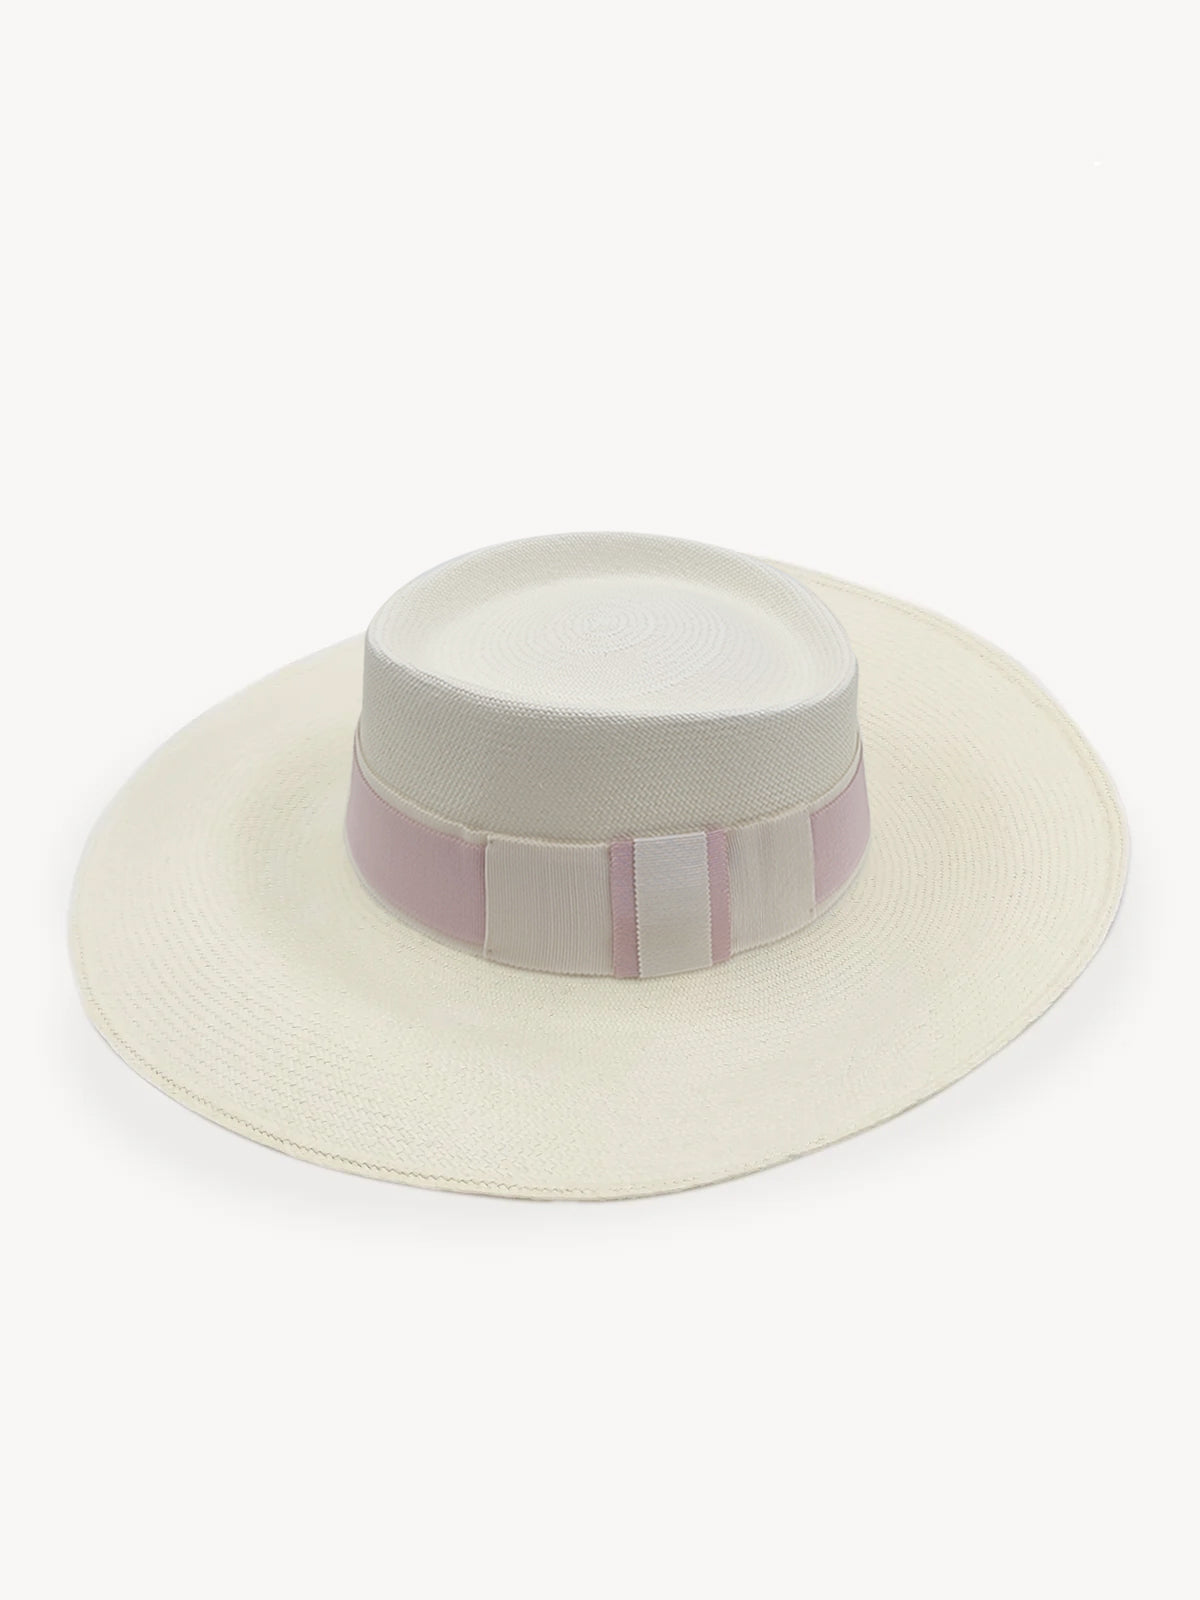 player grand borde for woman 100% Capri elegant pink hat front